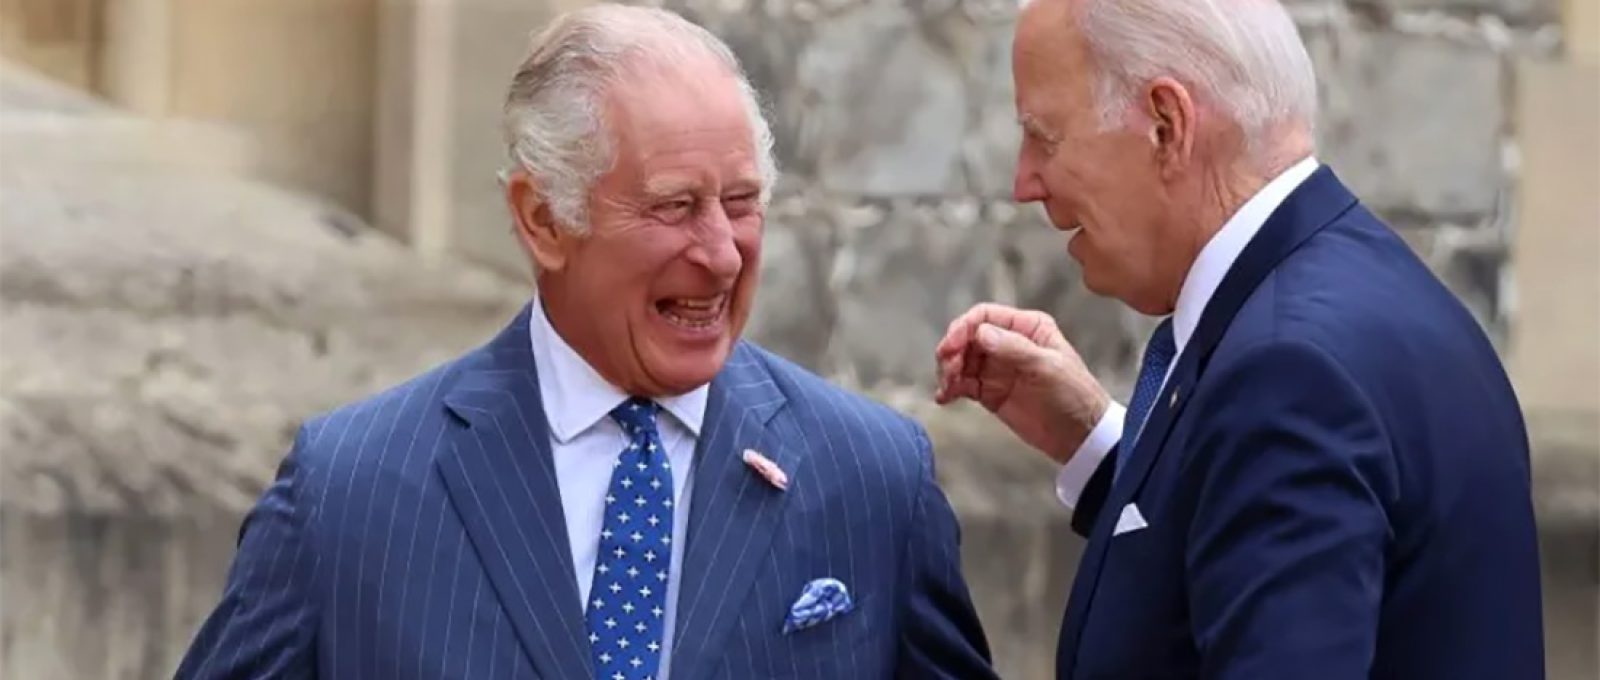 O rei Charles cumprimenta o presidente Joe Biden no Castelo de Windsor, em Berkshire, Inglaterra (Andrew Caballero-Reynolds/Getty Images).